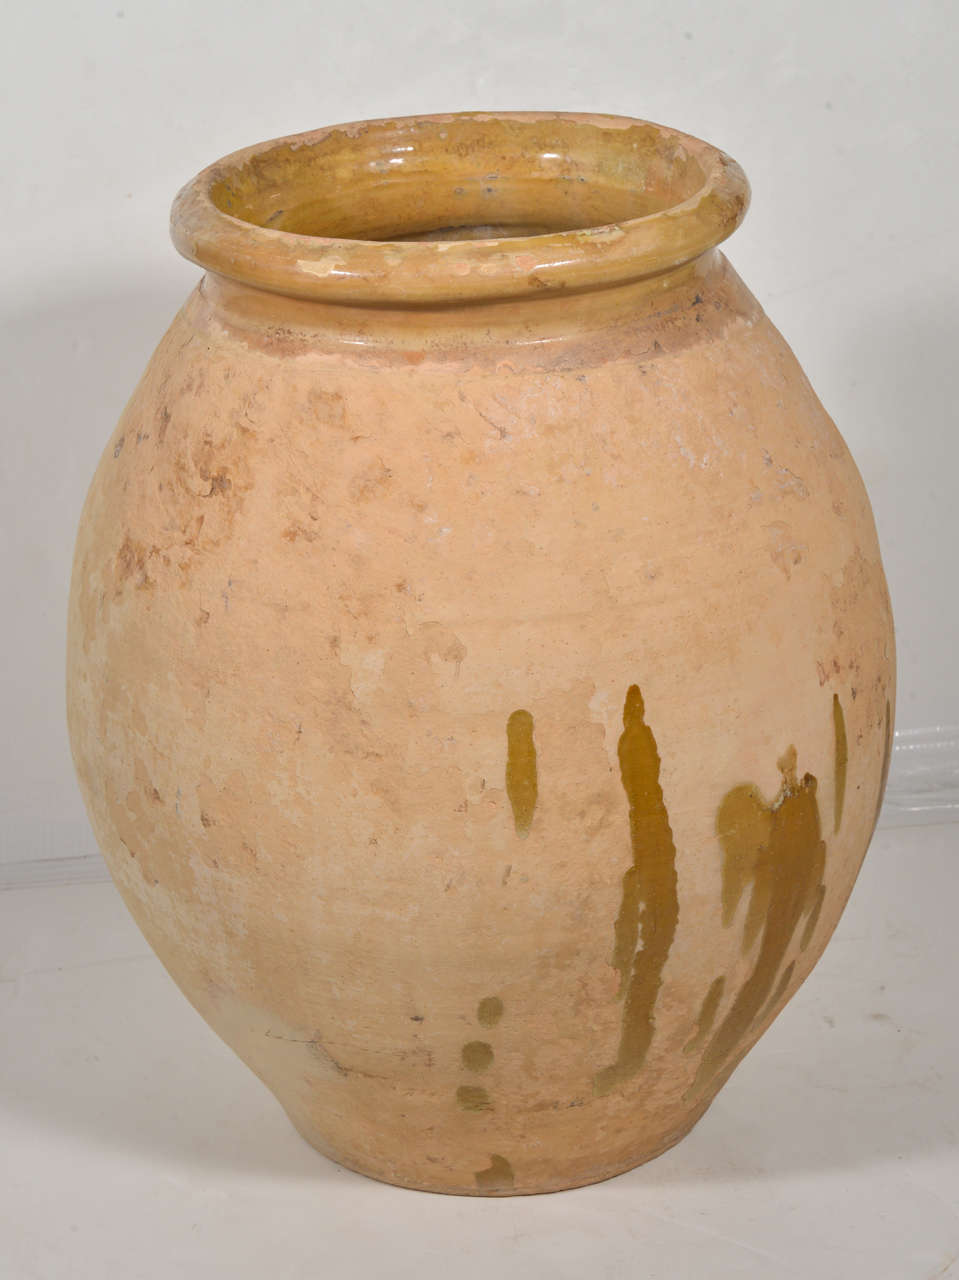 Beautiful 19th century biot jar with glaze trickling down side.